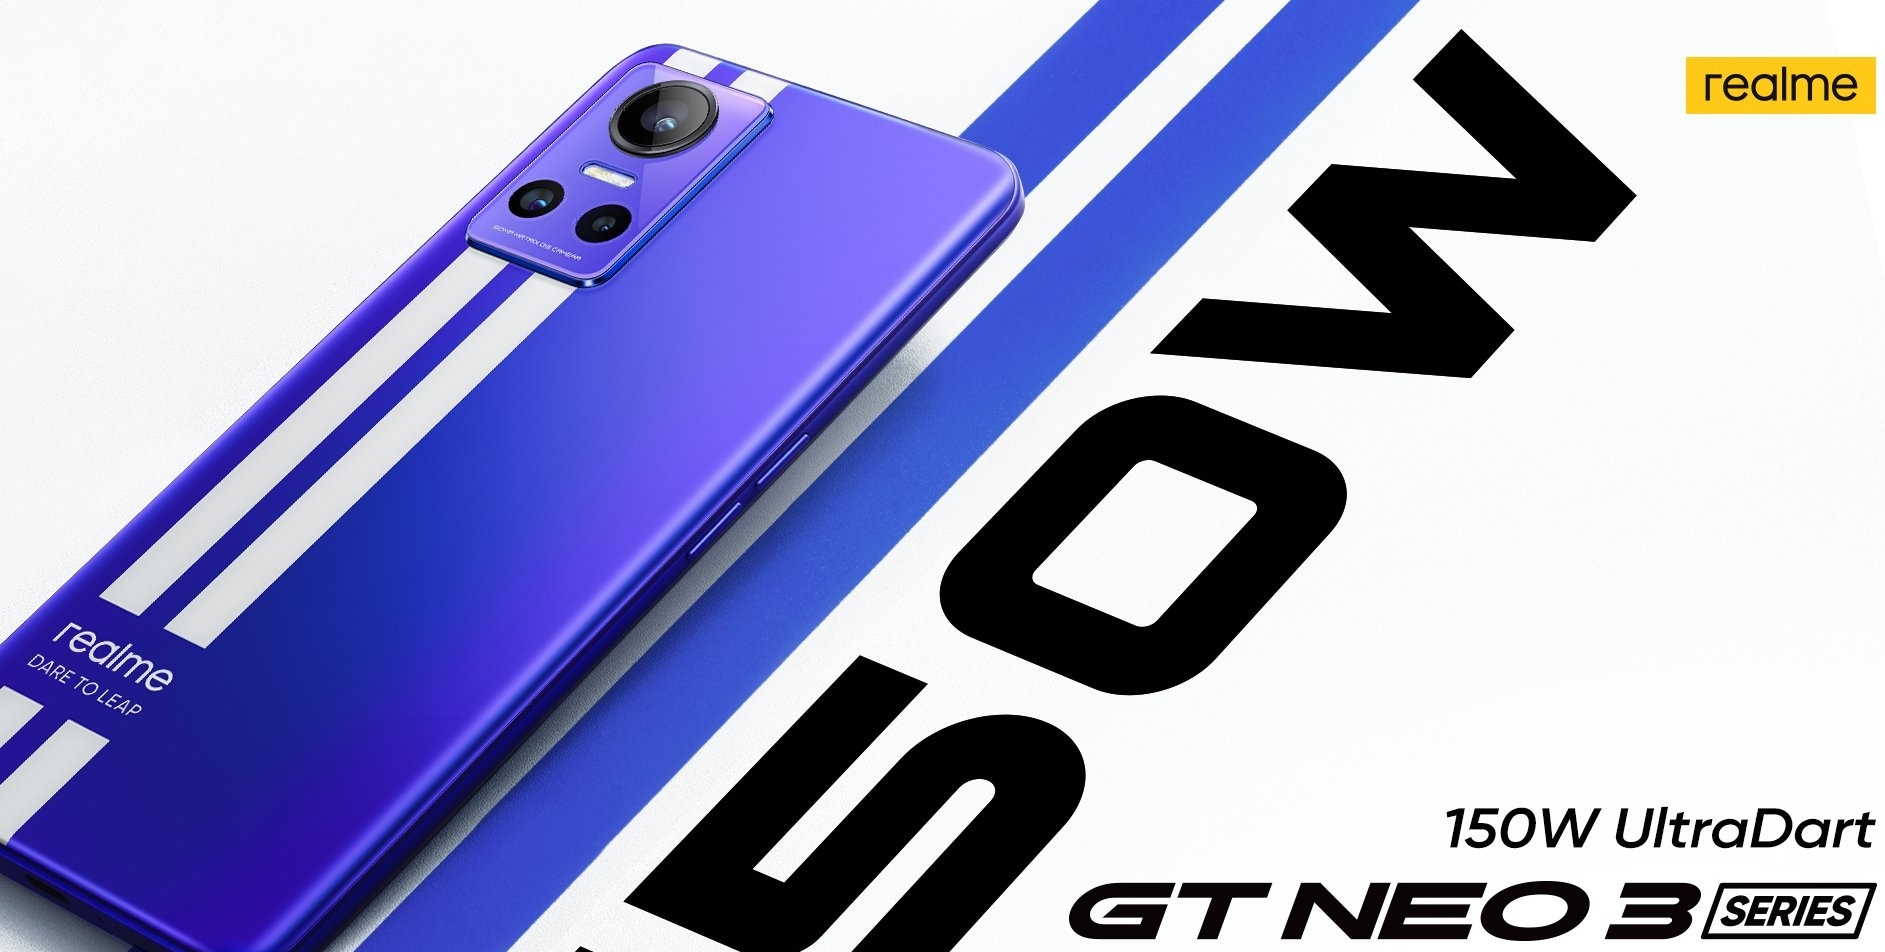 Cek Keunggulan dan Kekurangan Realme GT Neo 3 yang Dibekali Fast Charging 150 W serta Kamera Utama 50 MP